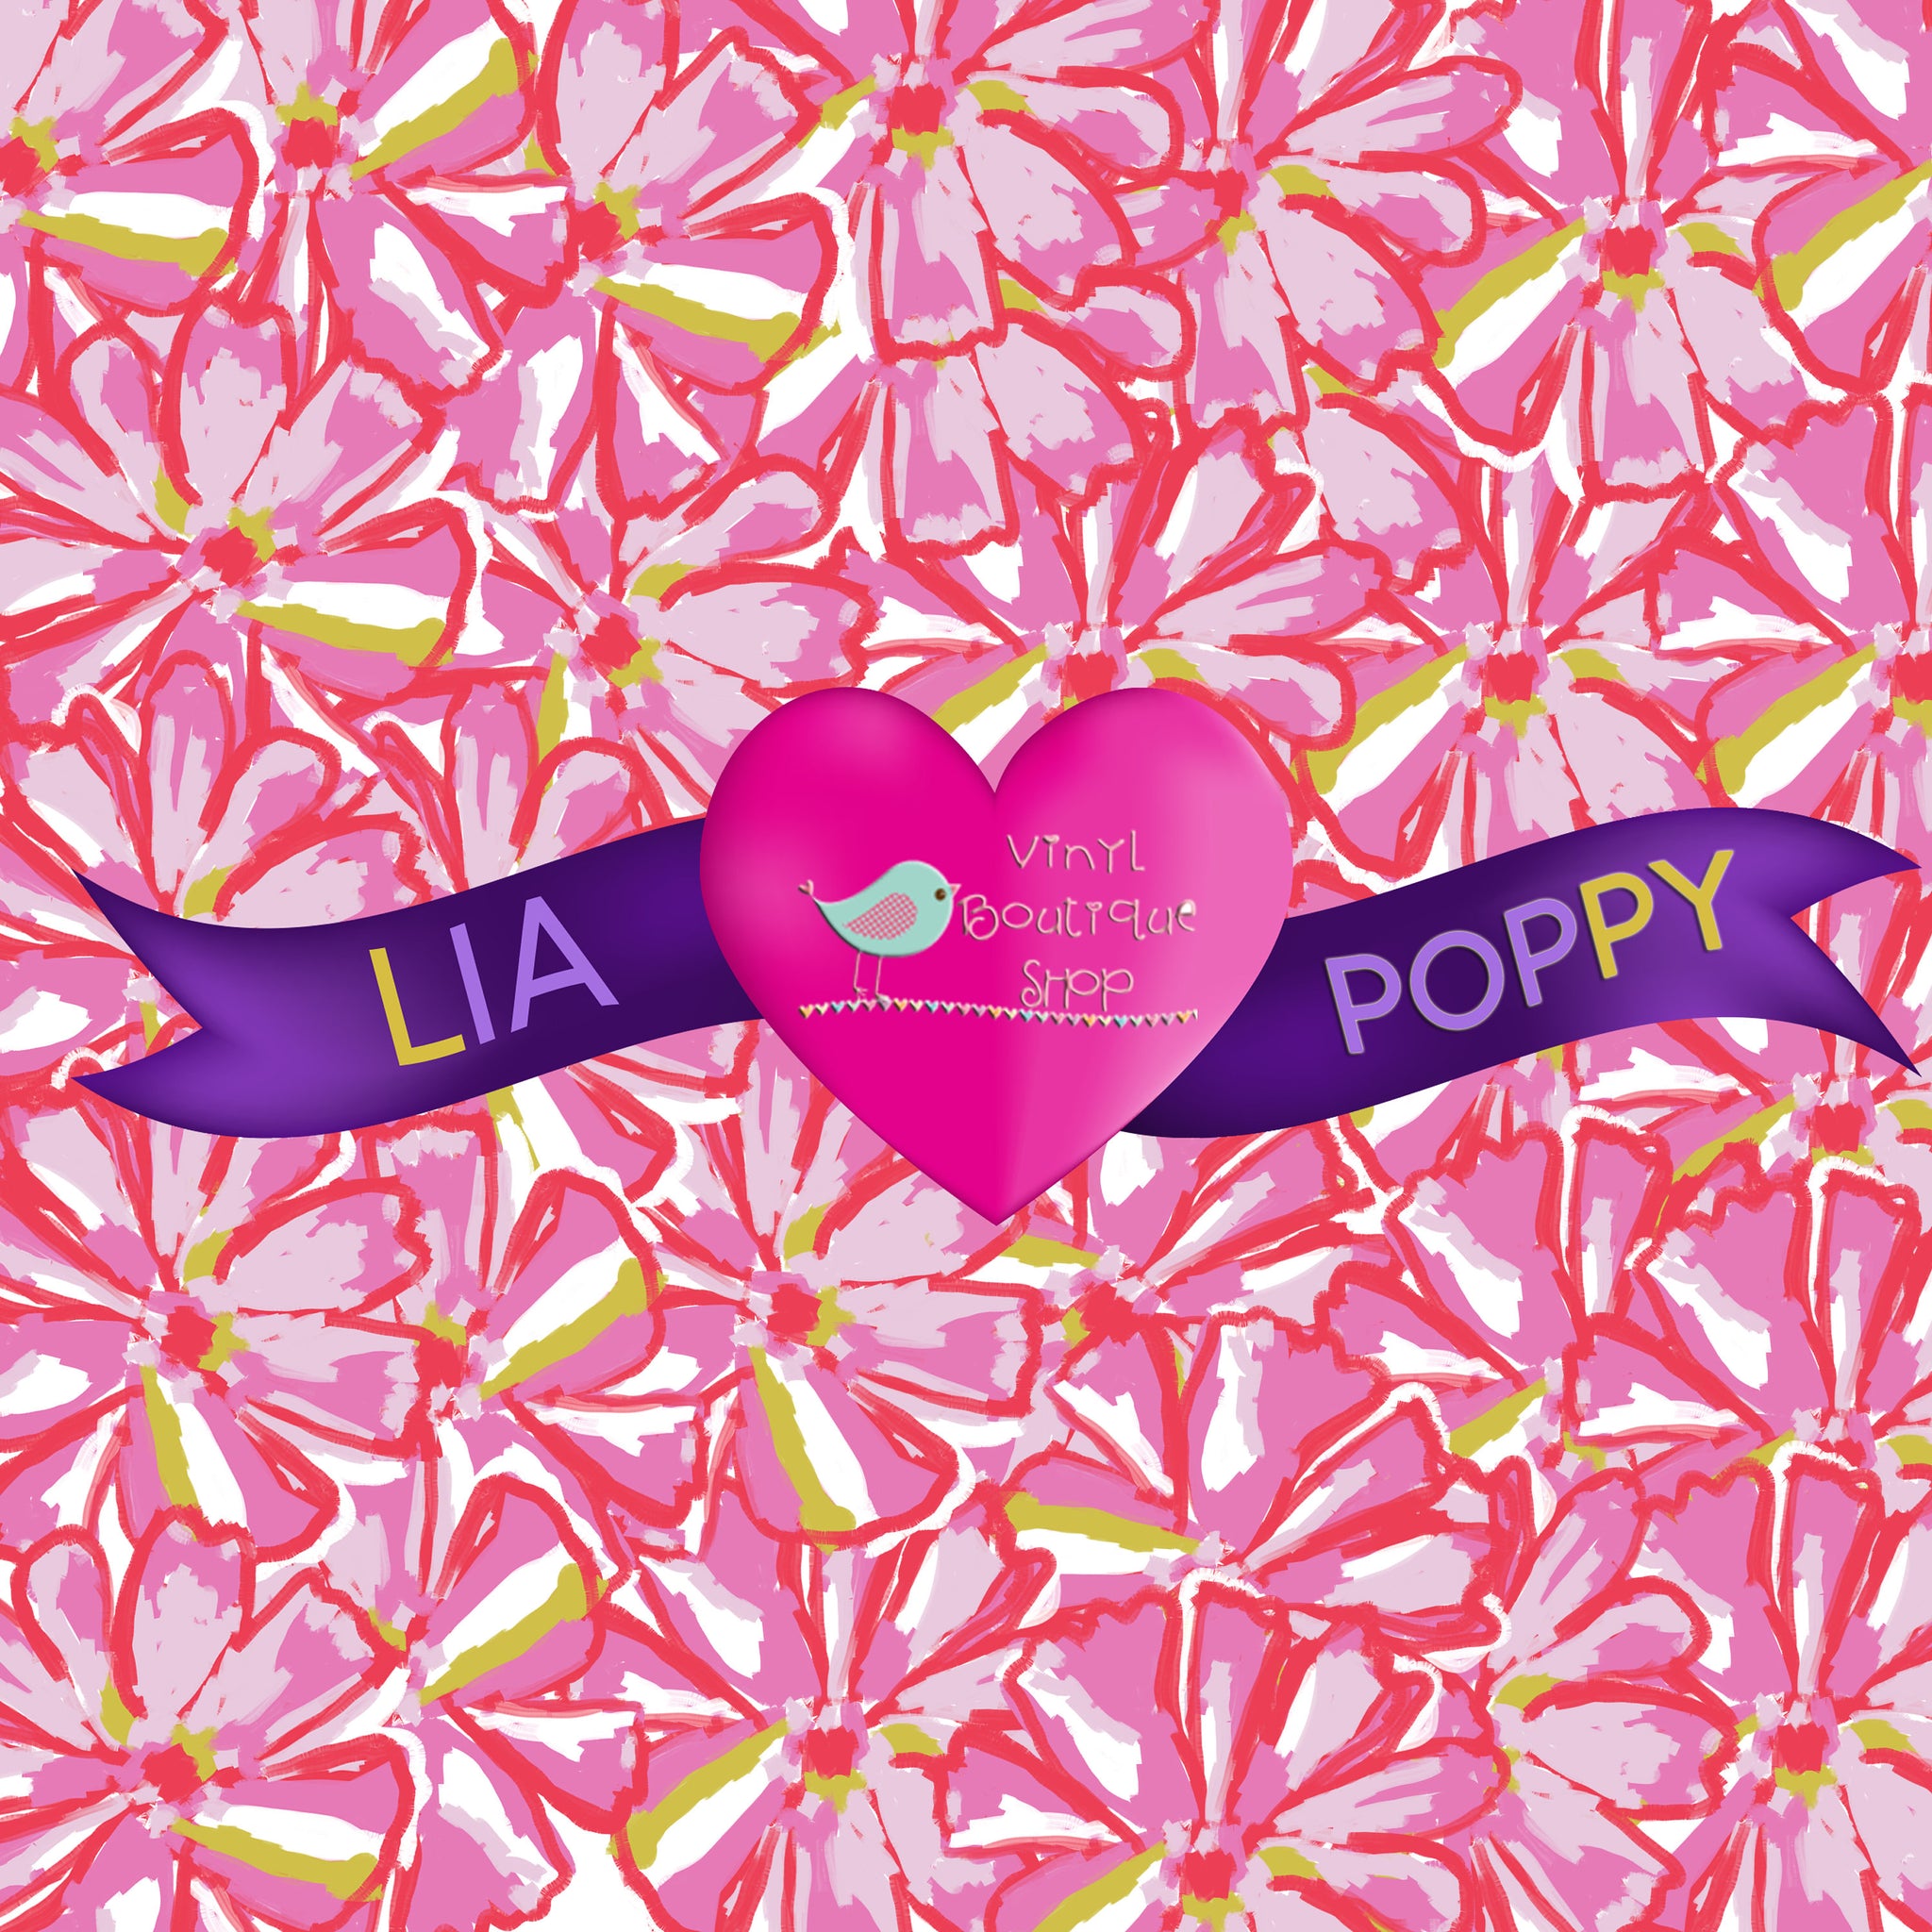 Pink Flower Lia Poppy Vinyl Sheet Sheet LPY-7 - Vinyl Boutique Shop